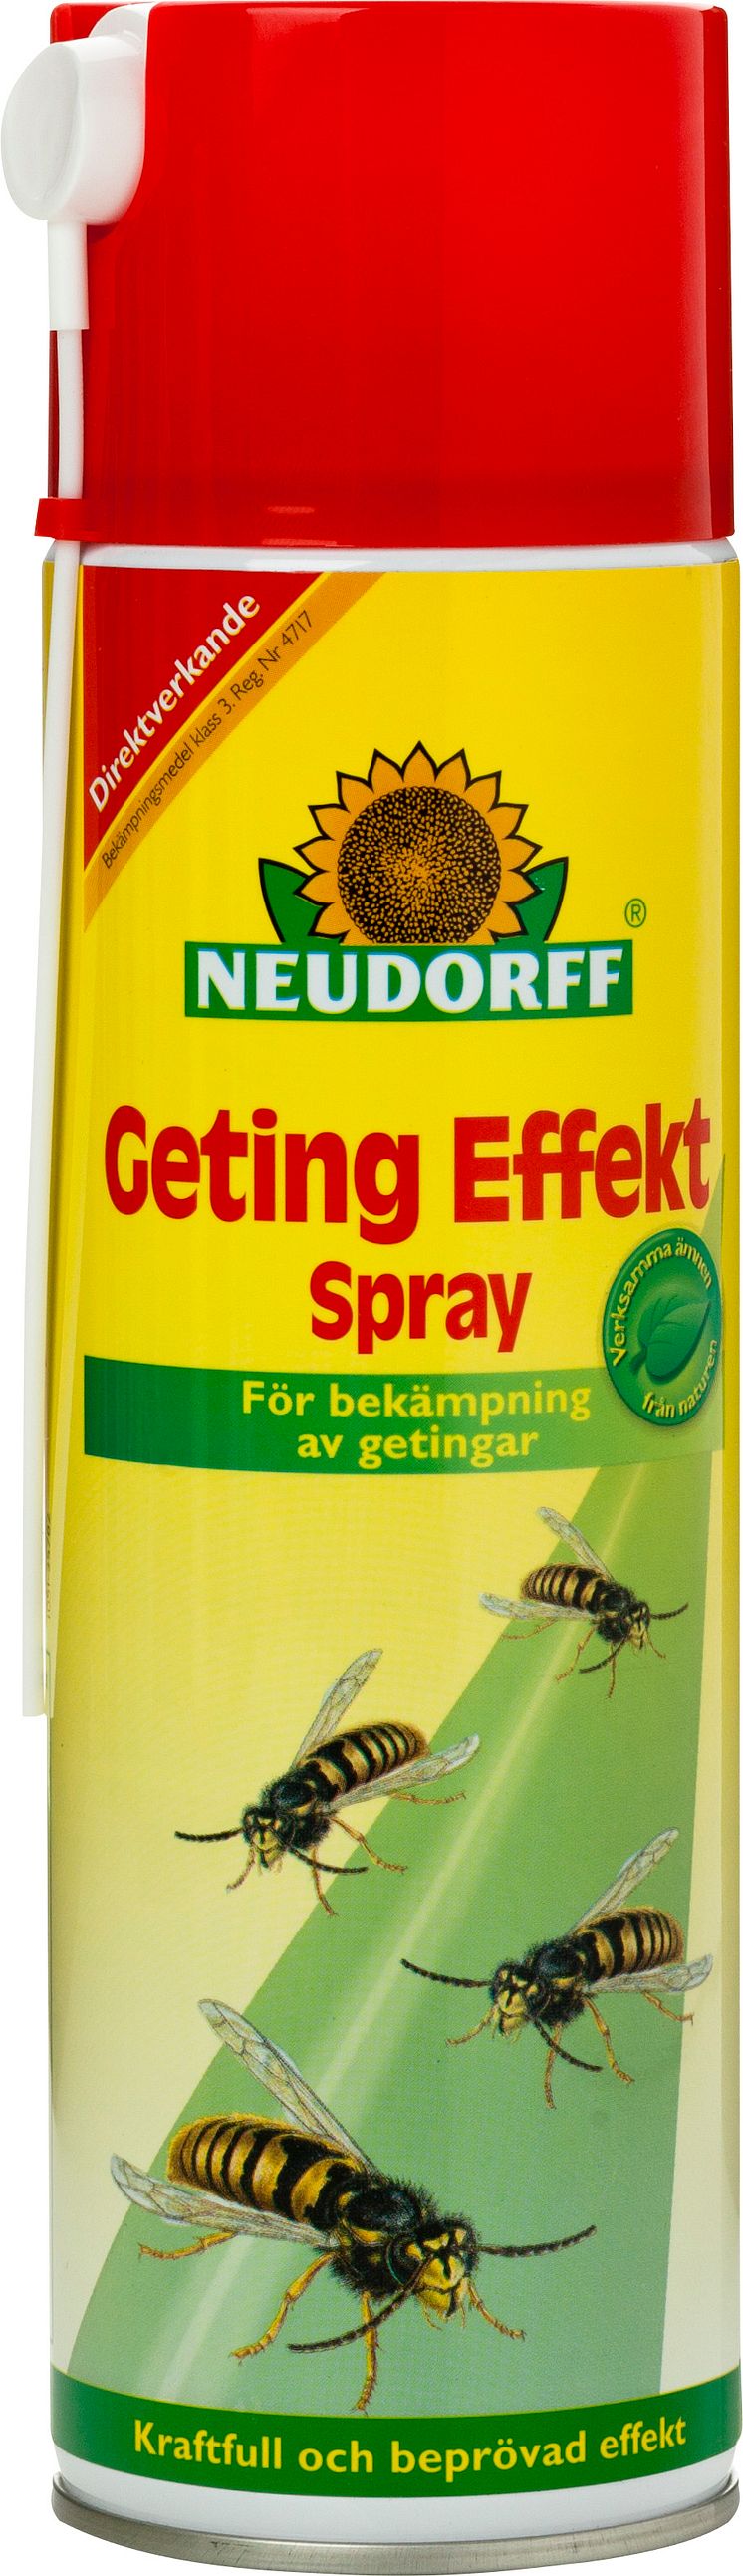 Geting Effekt Spray - Neudorff